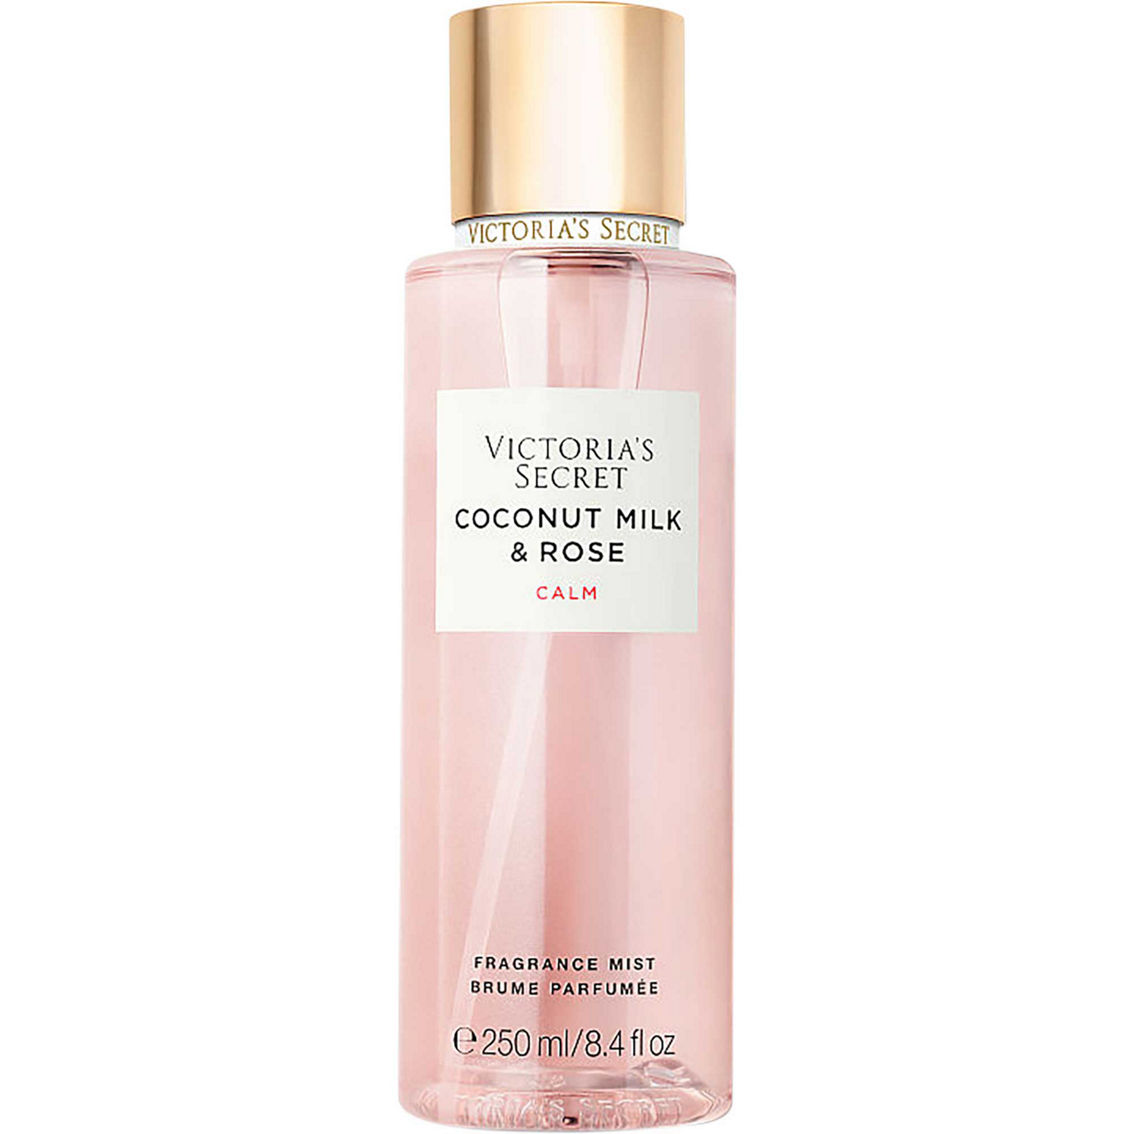 Victoria's Secret Coconut Milk And Rose 8.4 Oz. Fragrance Mist